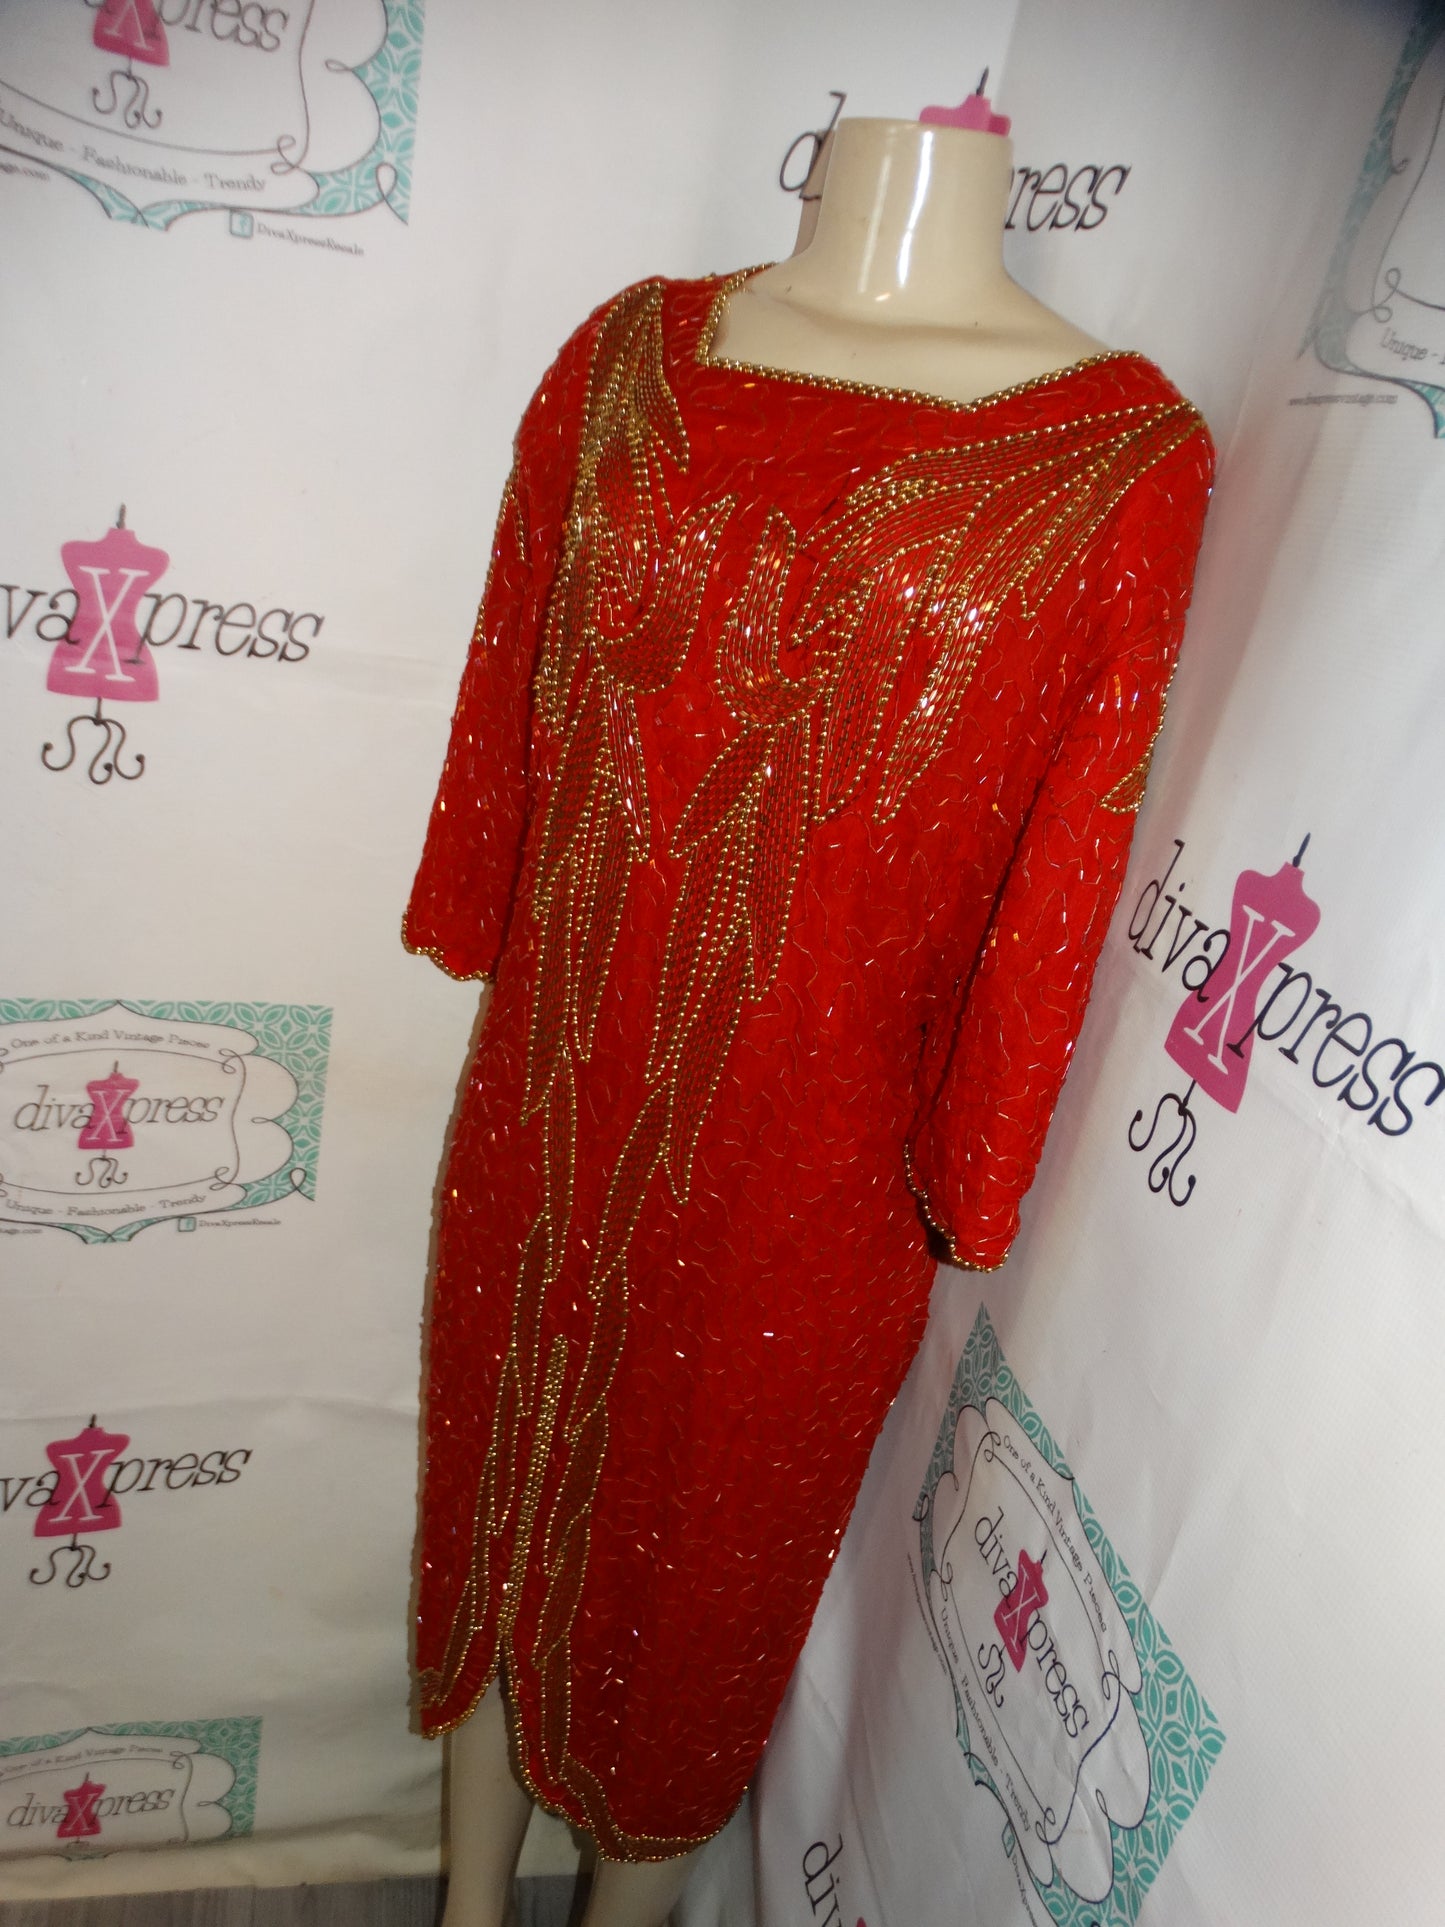 Vintage REd/Gold Sequins Dress Size 2x